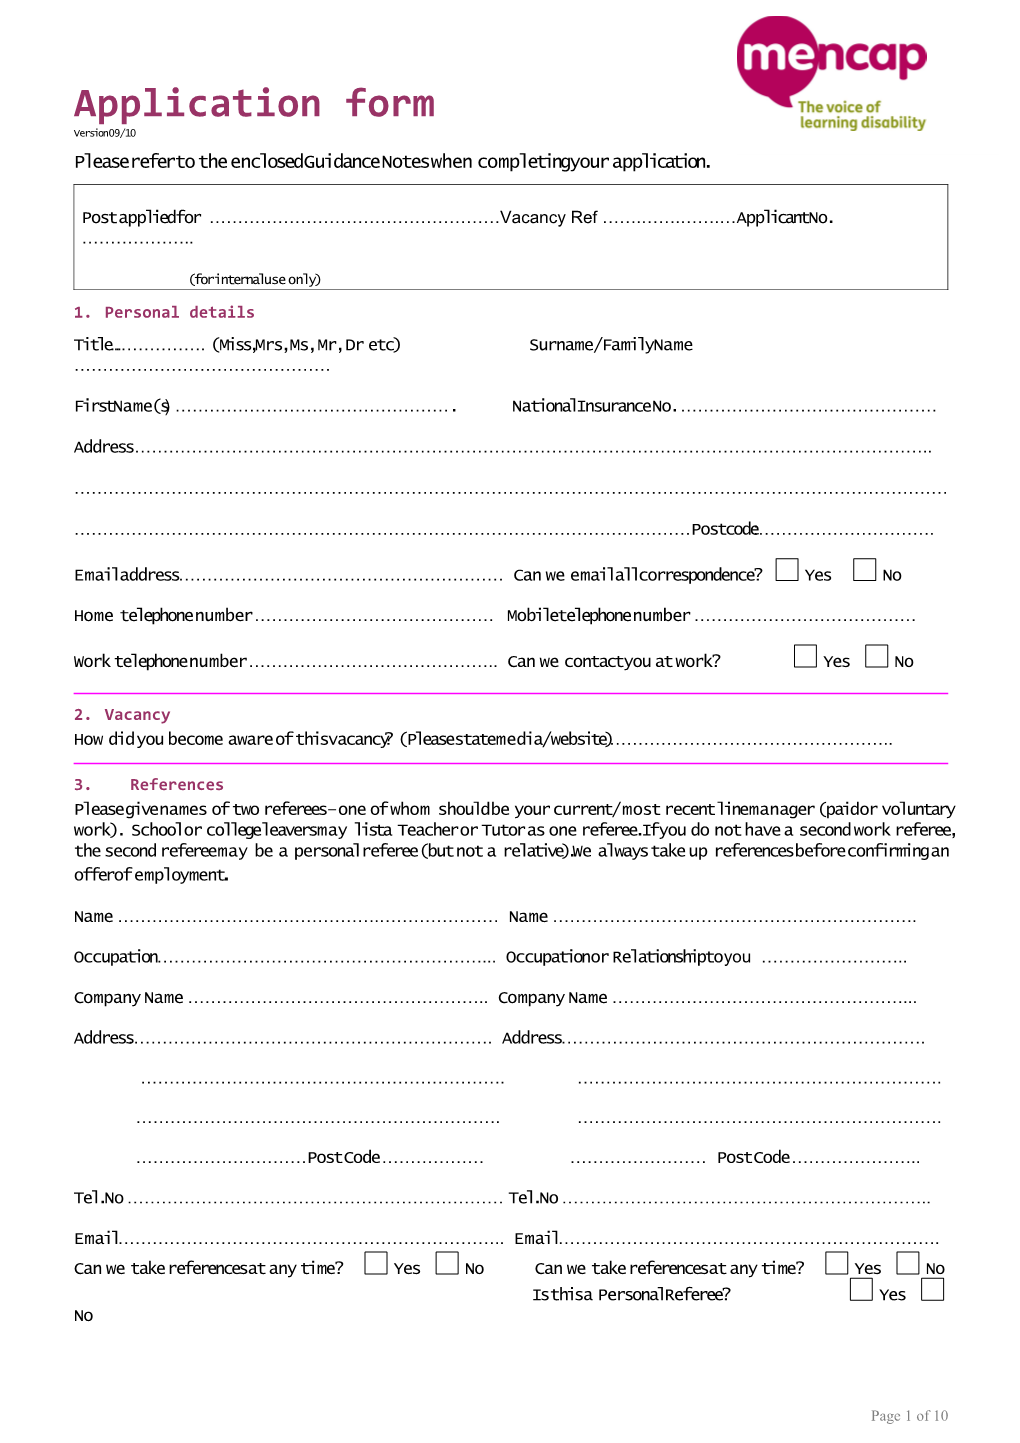 Manual Application Form